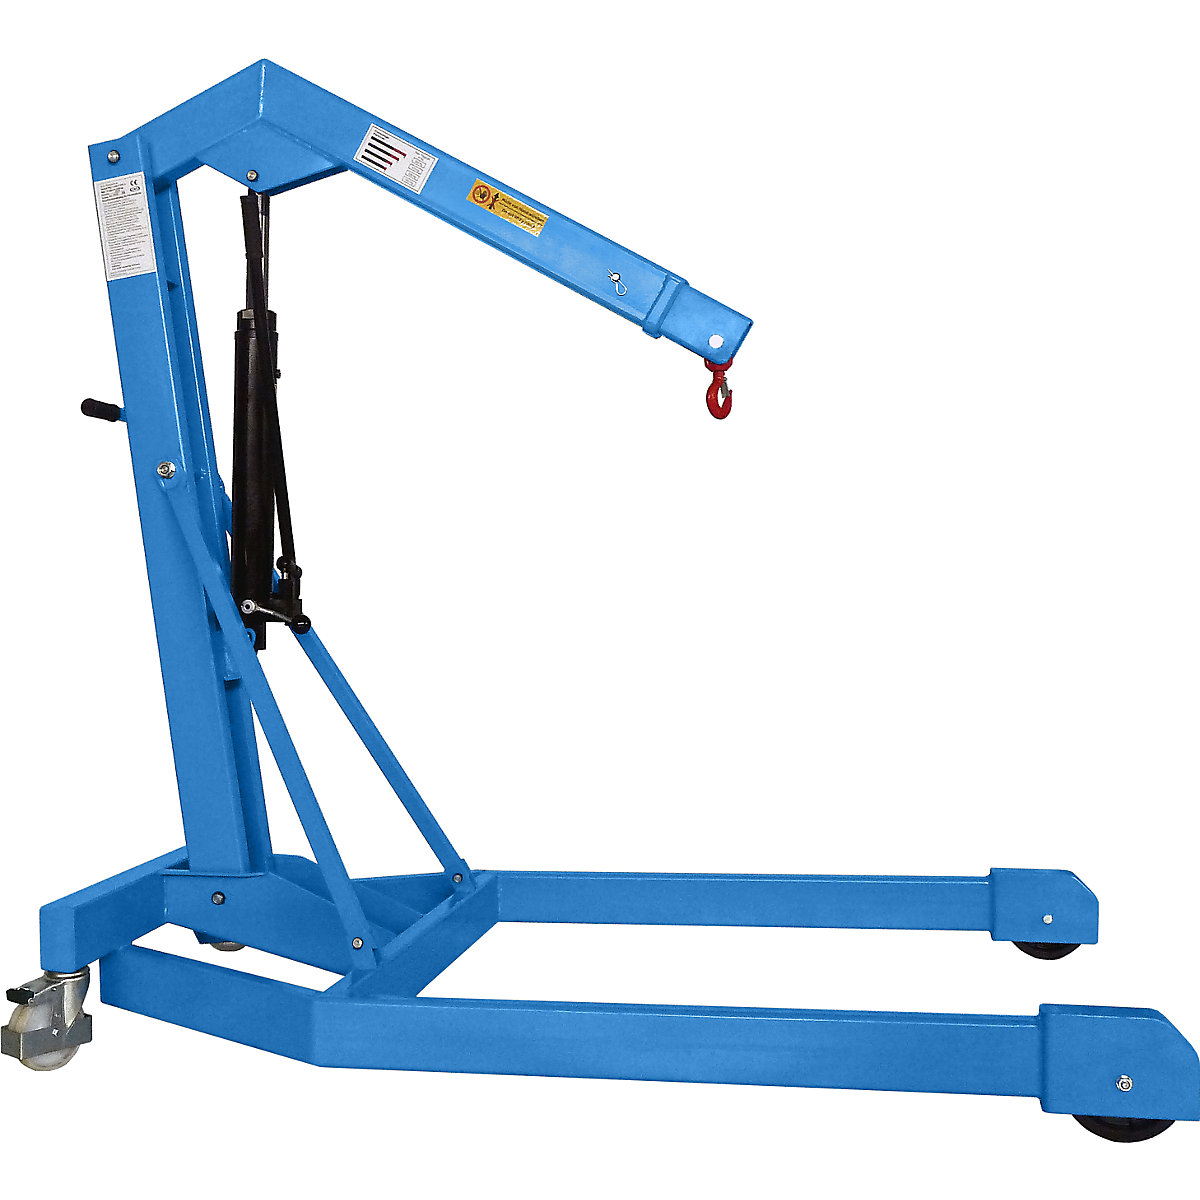 BLUE workshop crane